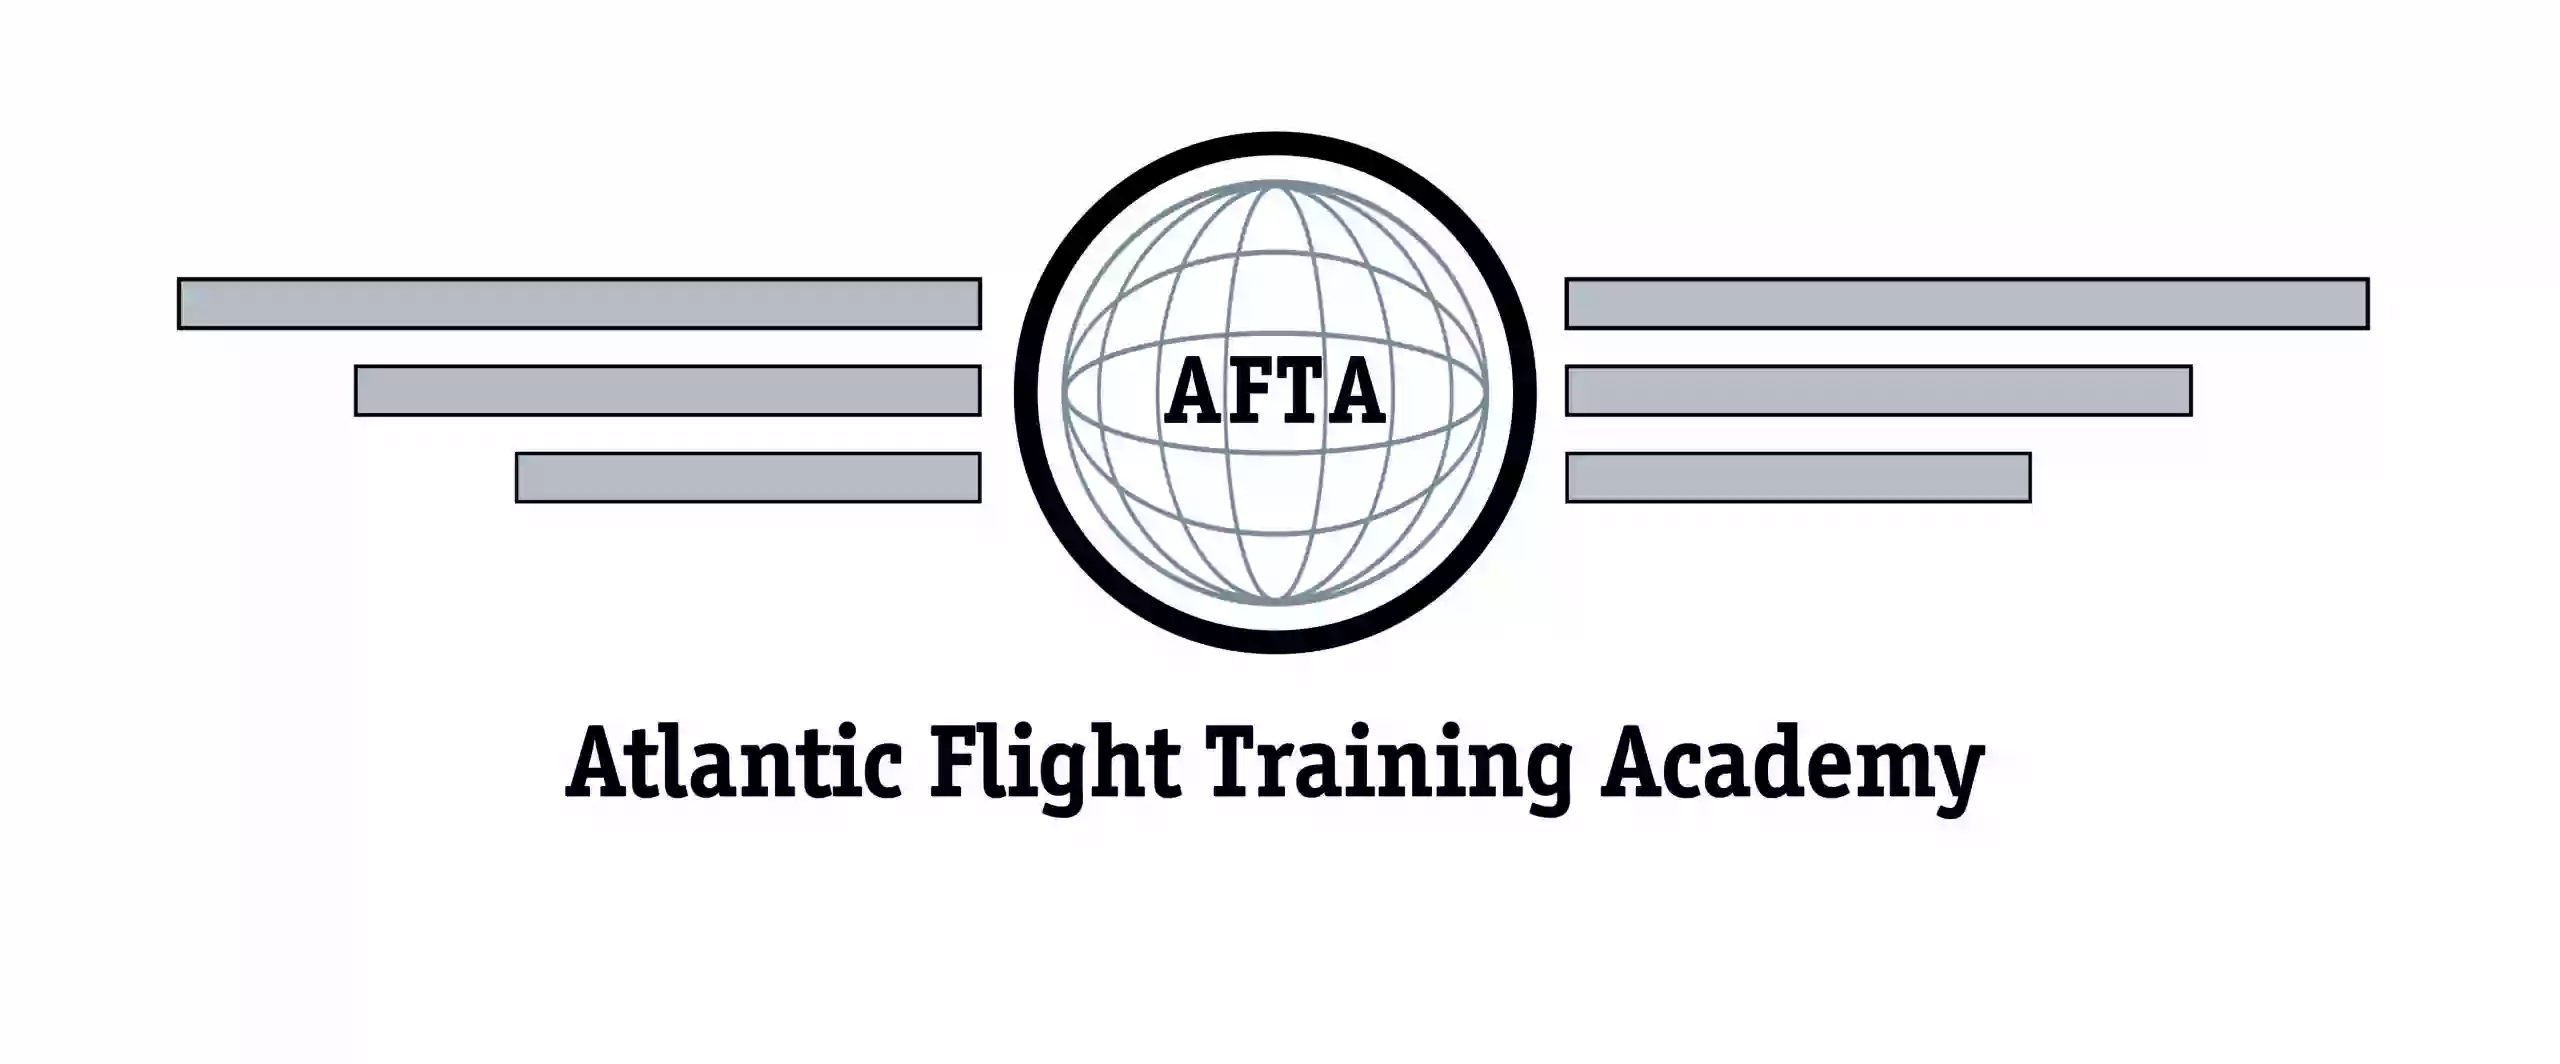 Atlantic Flight Training Academy